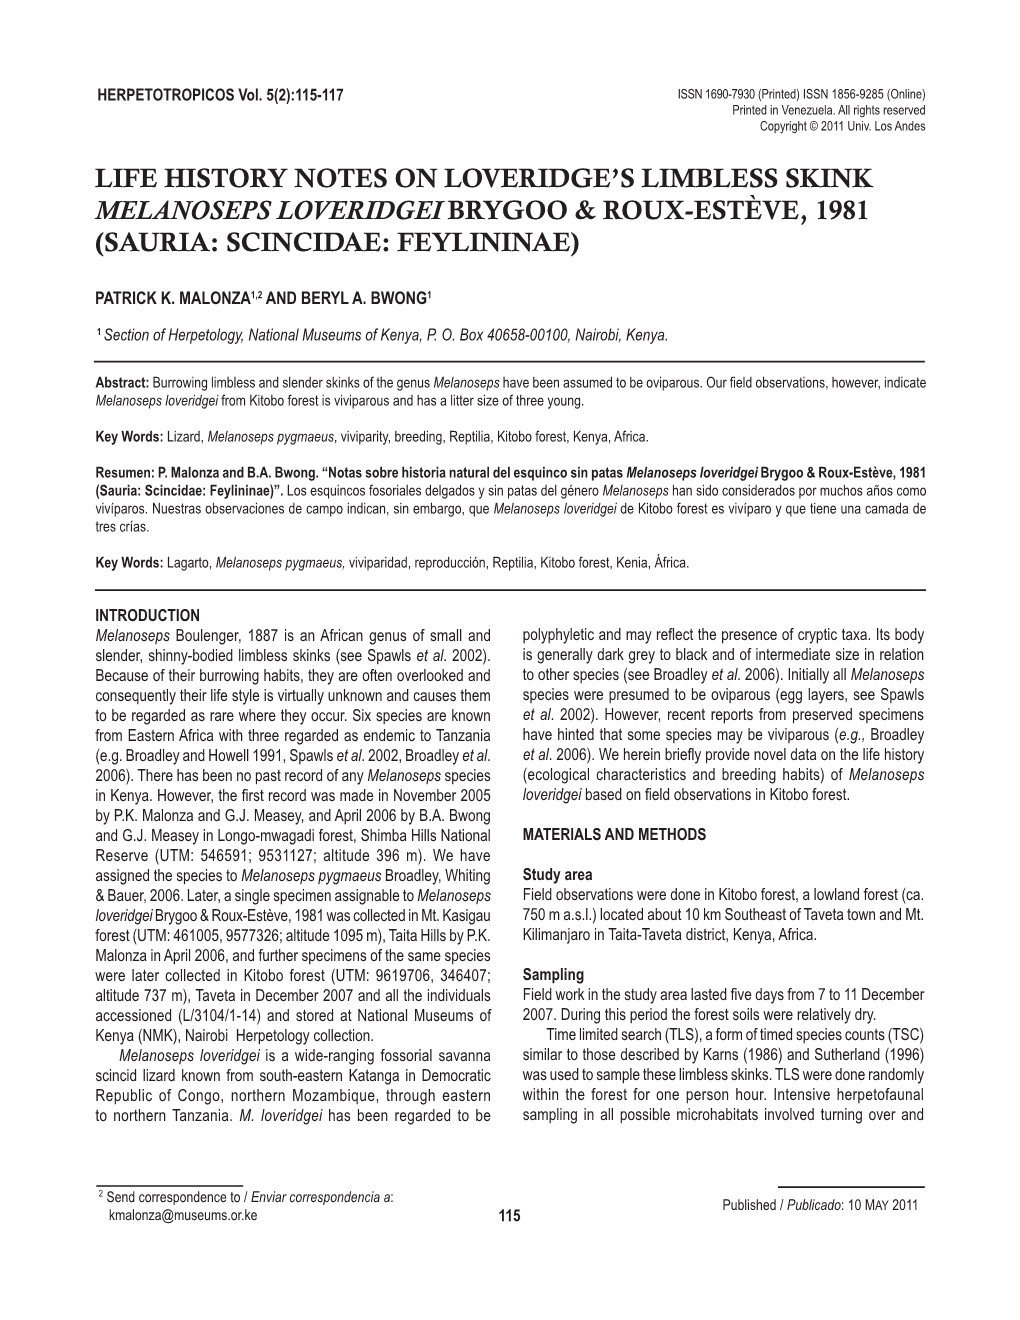 Life History Notes on Loveridge's Limbless Skink Melanoseps Loveridgei Brygoo & Roux-Estève, 1981 (Sauria: Scincidae